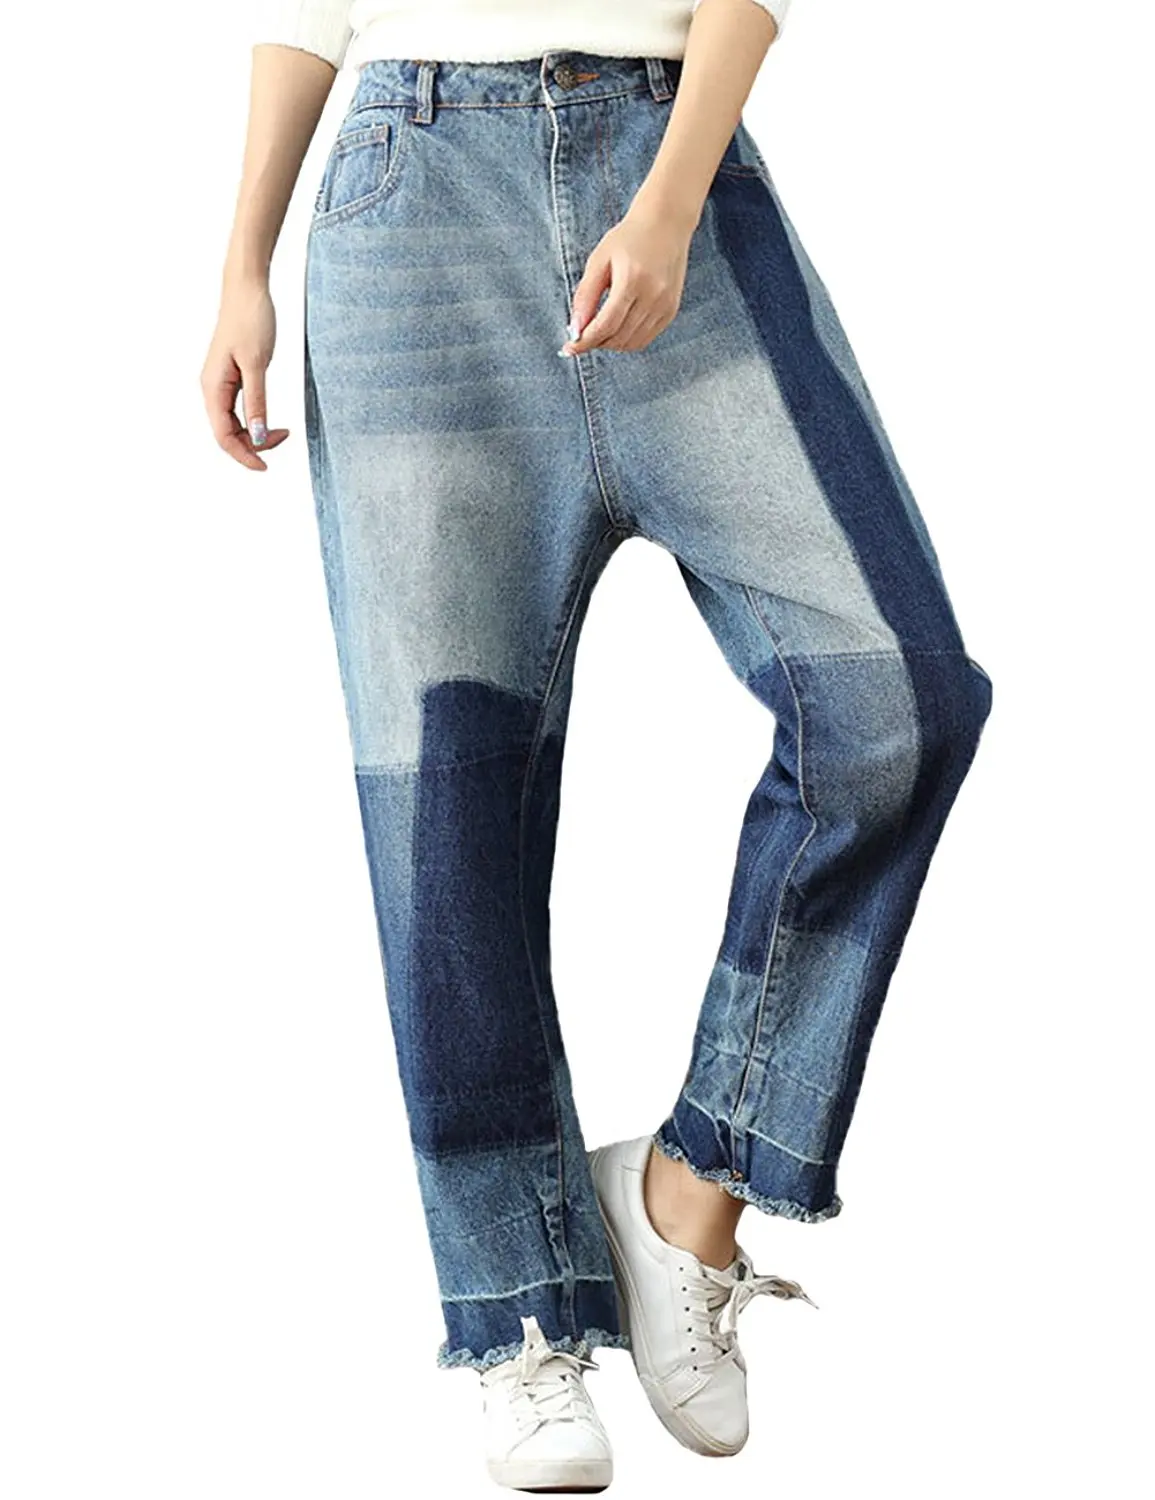 Cheap Baggy Boyfriend Jeans For Women Find Baggy Boyfriend Jeans For Women Deals On Line At Alibaba Com